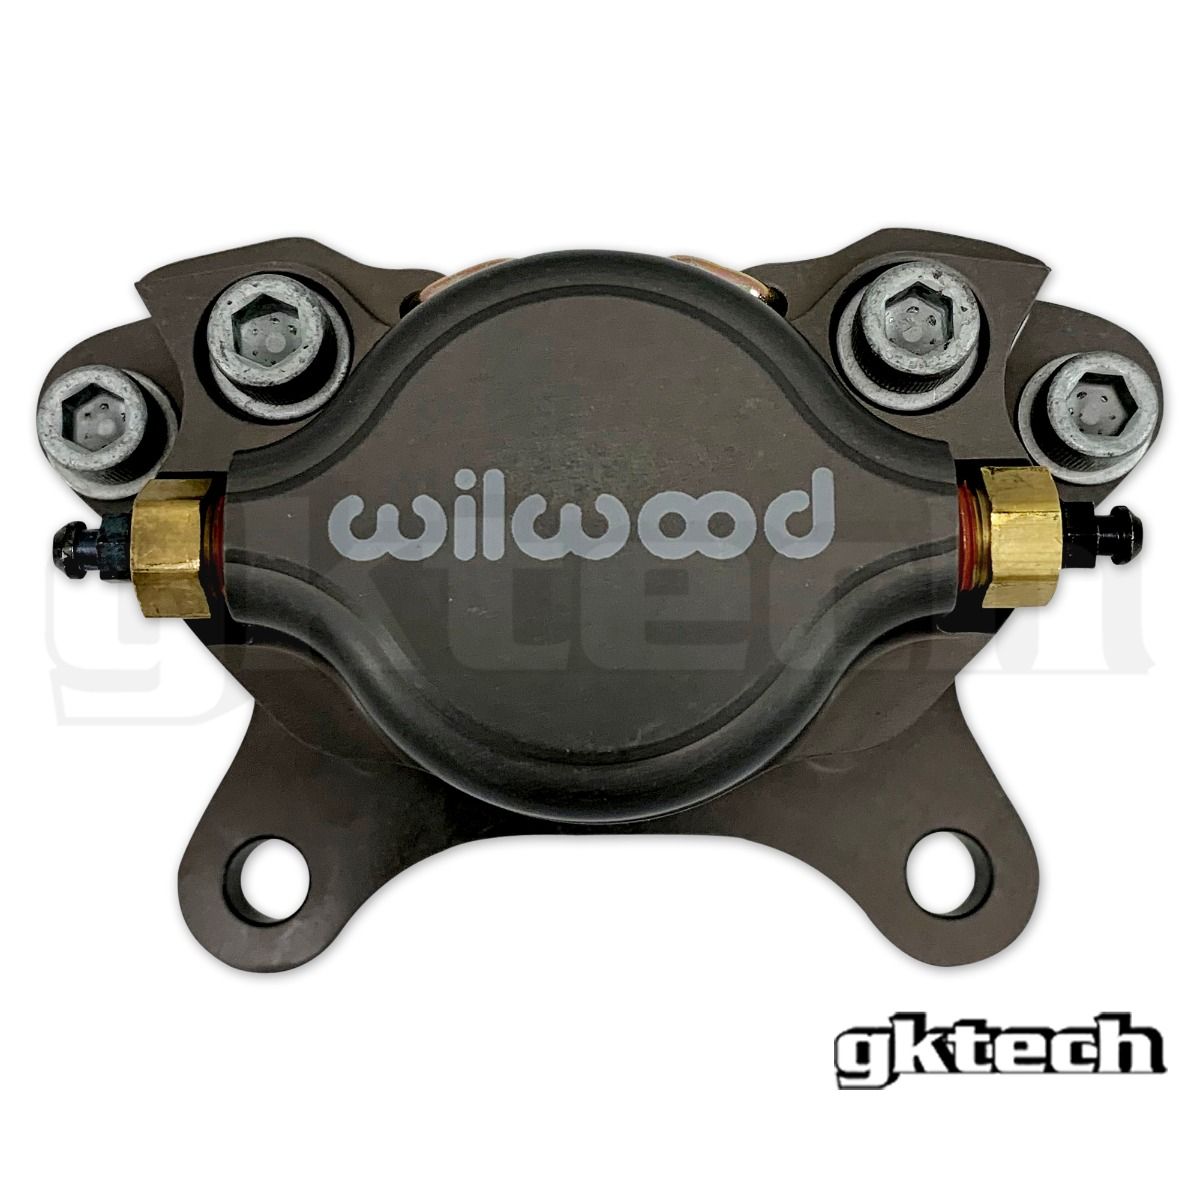 Wilwood 240sx dual caliper Hydraulic hidden e-brake setup - (10% combo discount)